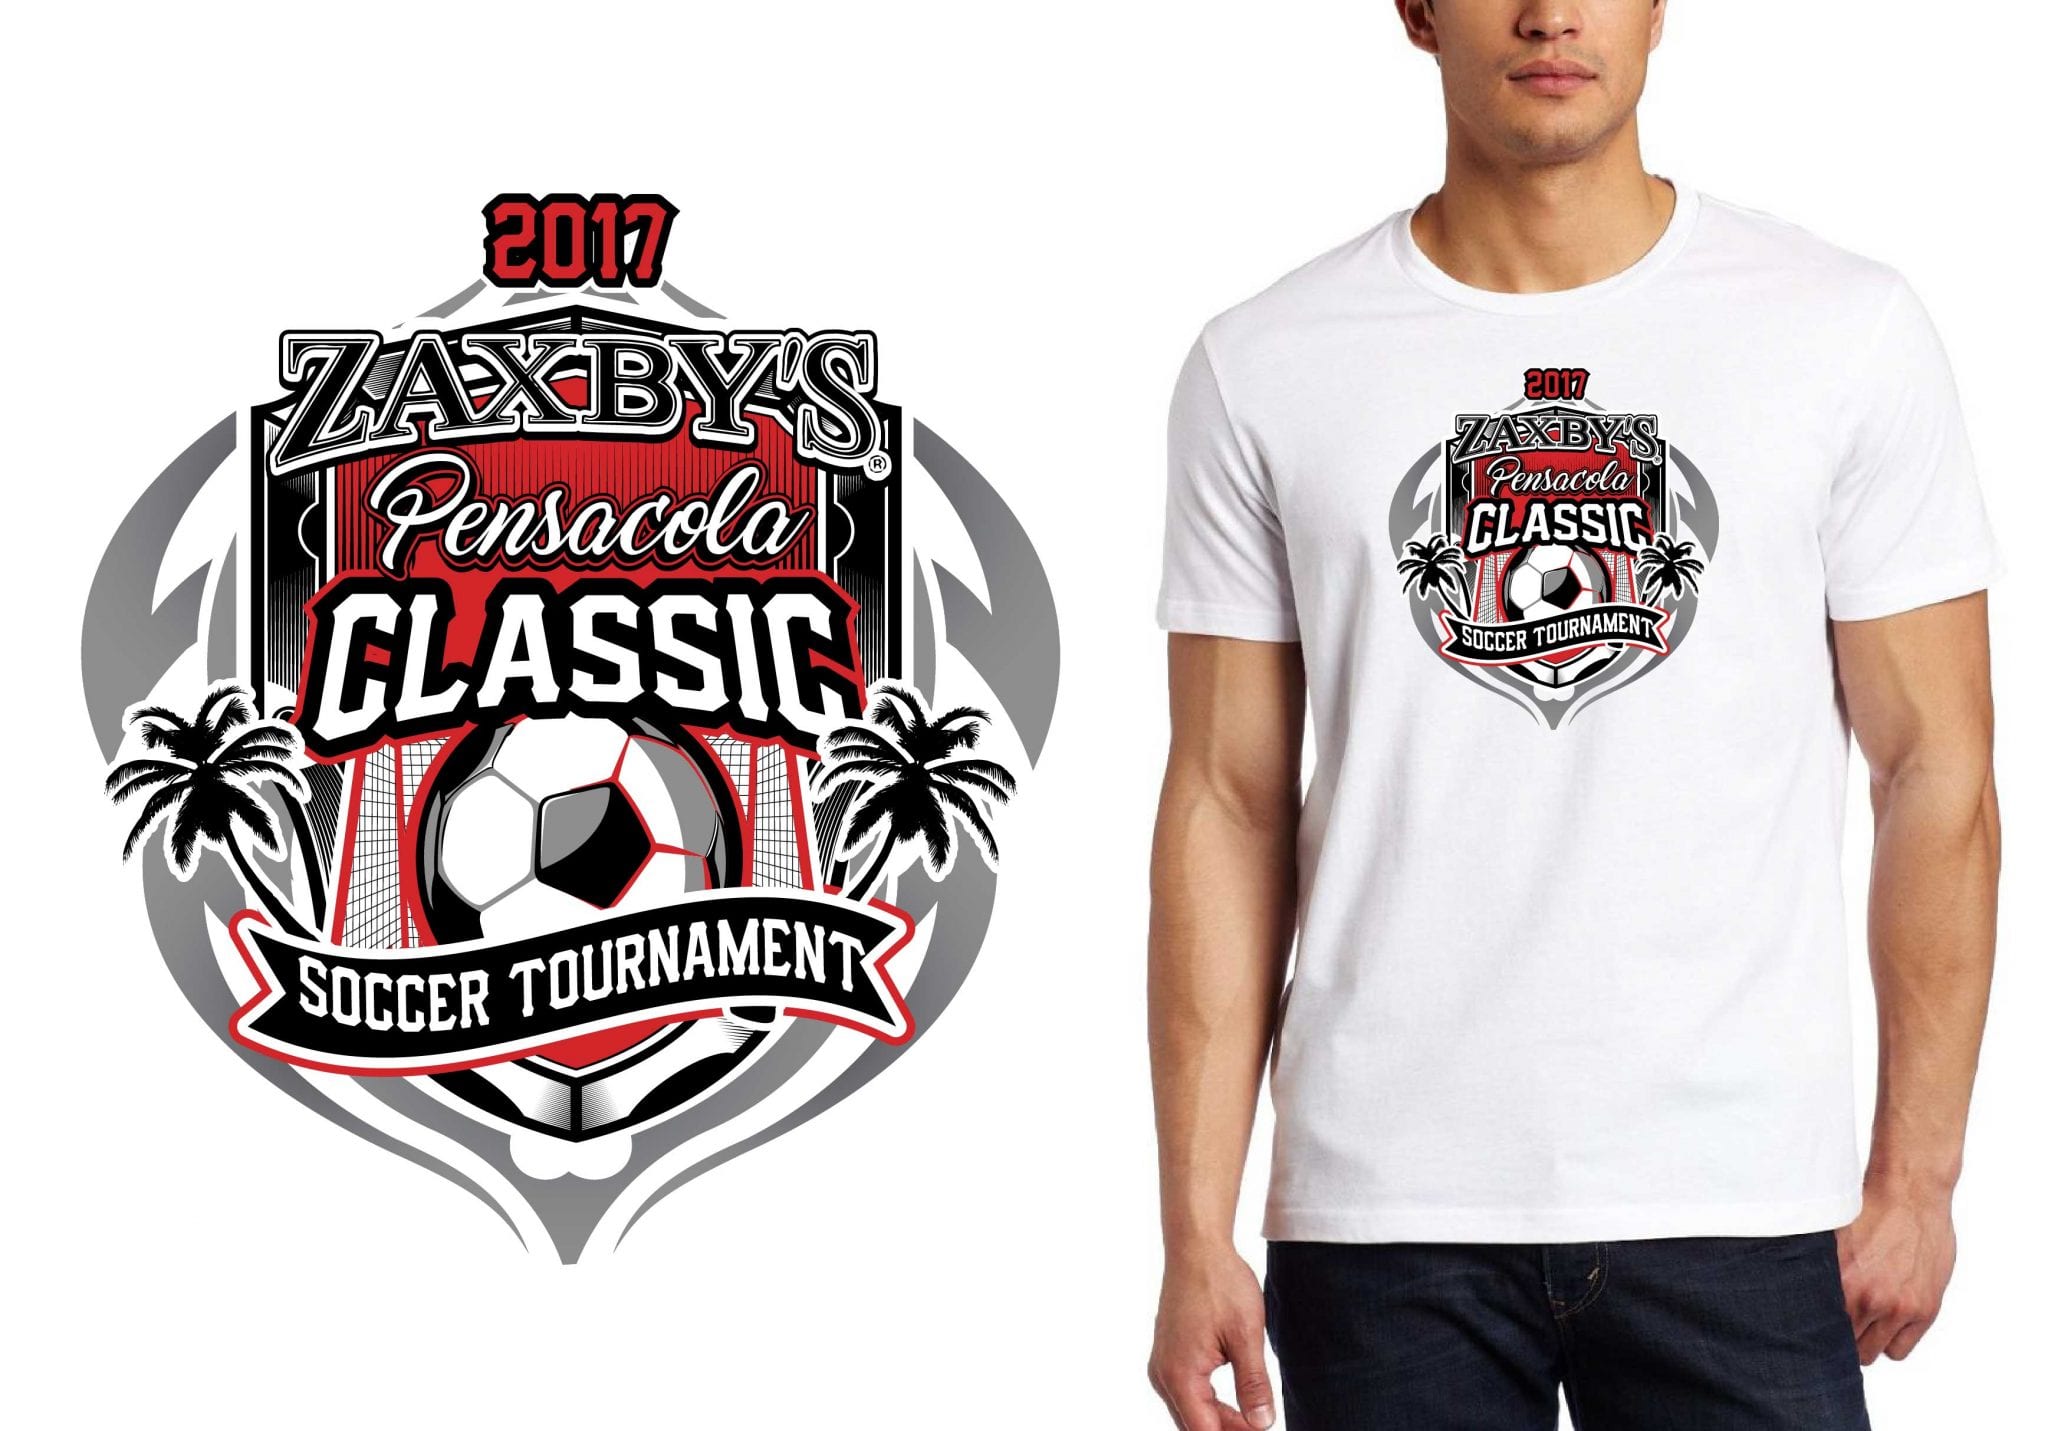 FRONT 2017 Zaxbys Pensacola Classic Soccer Tournament vector logo